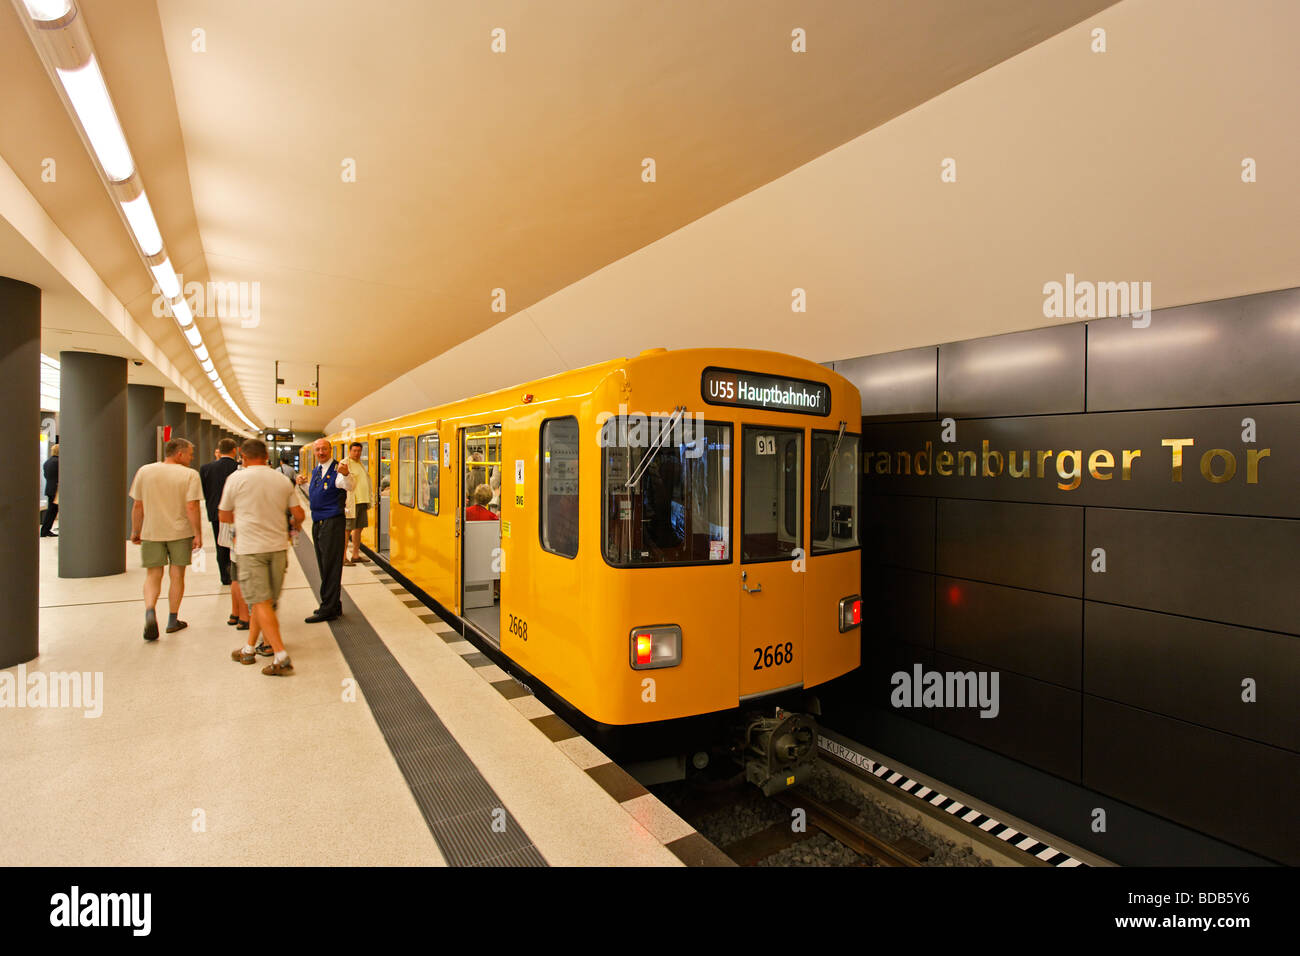 Brandburger Tor Metro Station of the new line U55 Berlin Germany Stock Photo